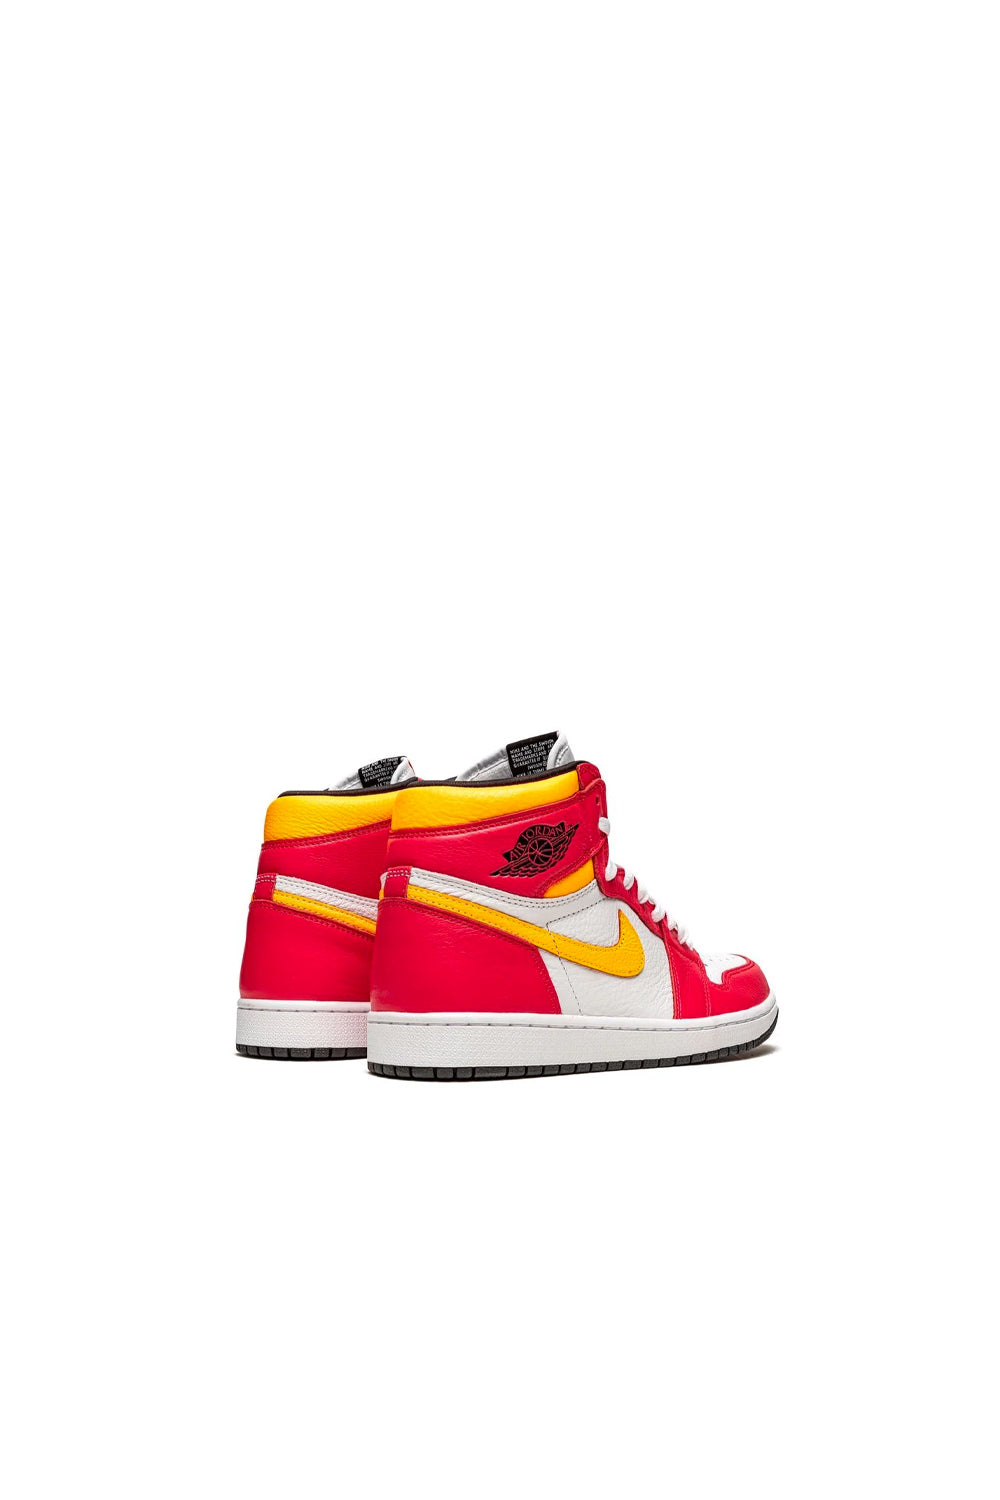 Nike Air Jordan 1 High OG "Light Fusion Red" sneakers